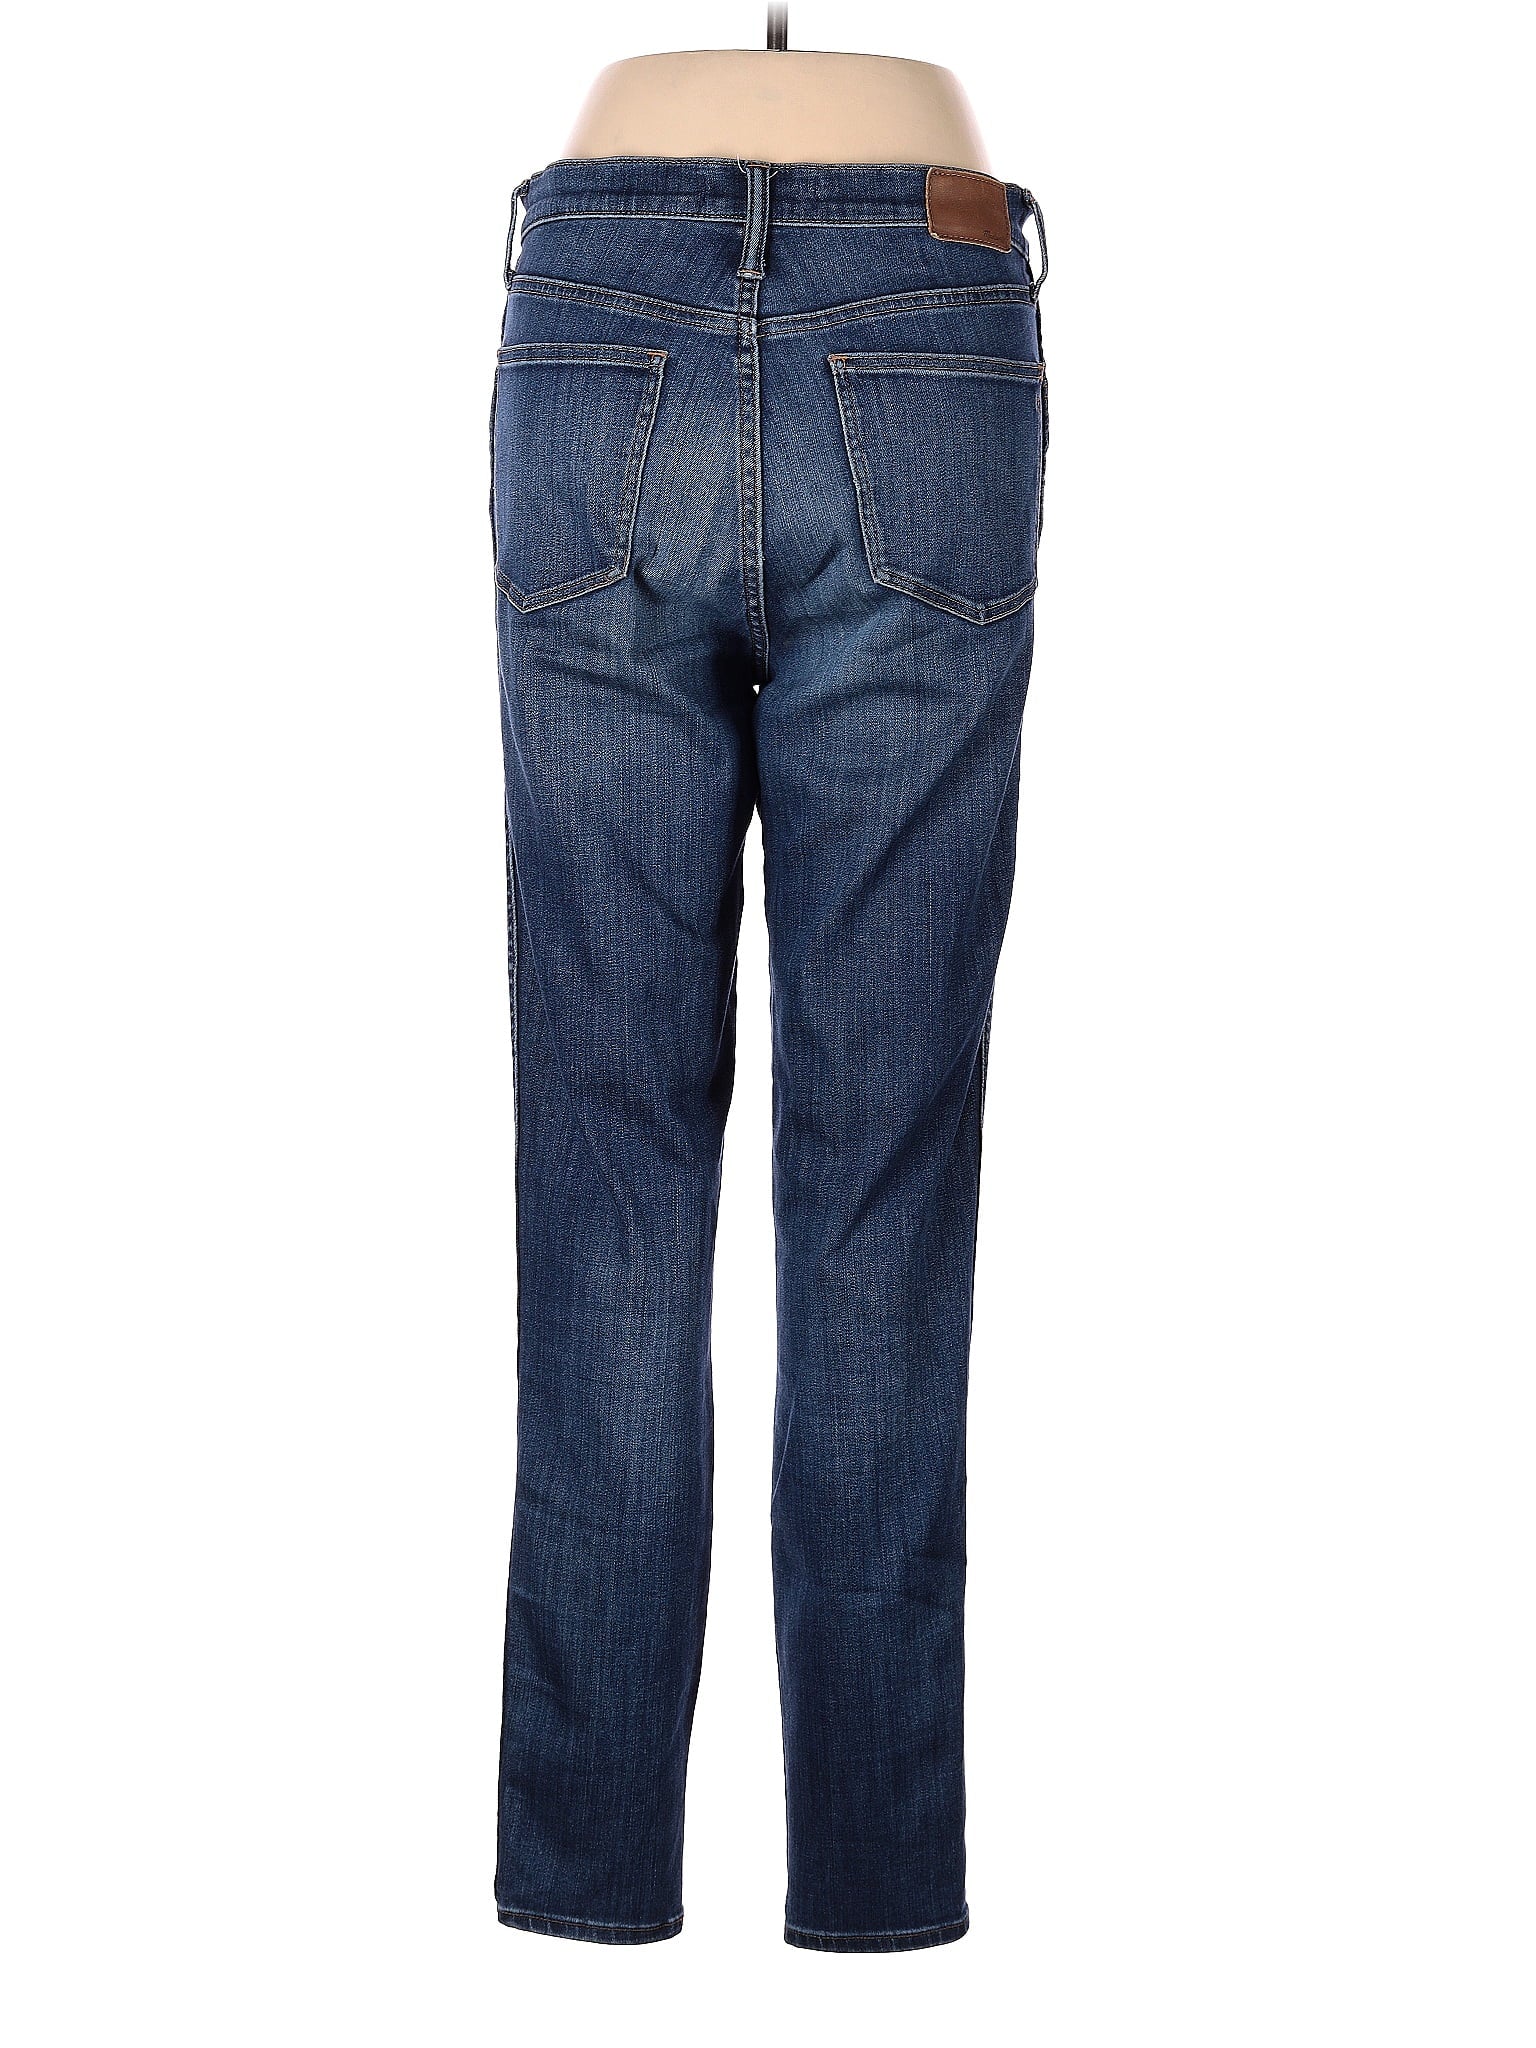 High-Rise Boyjeans Jeans in Dark Wash waist size - 29 T